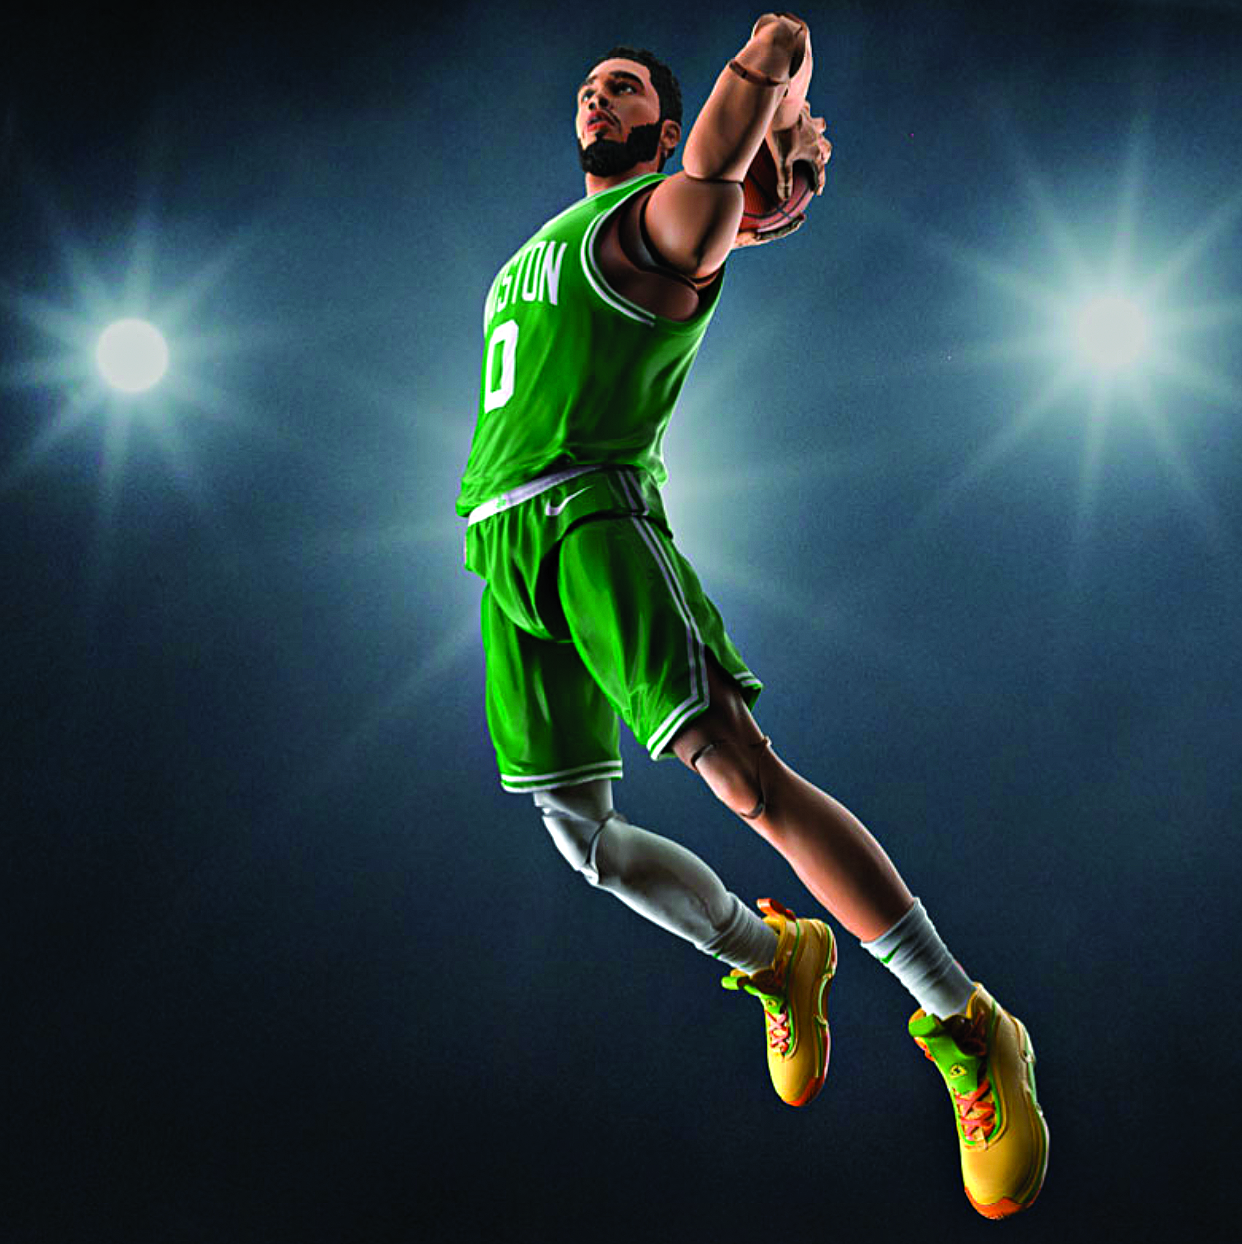 Starting Lineup’s Jayson Tatum NBA Action Figure Captures the Celtics Superstar’s Elite Game